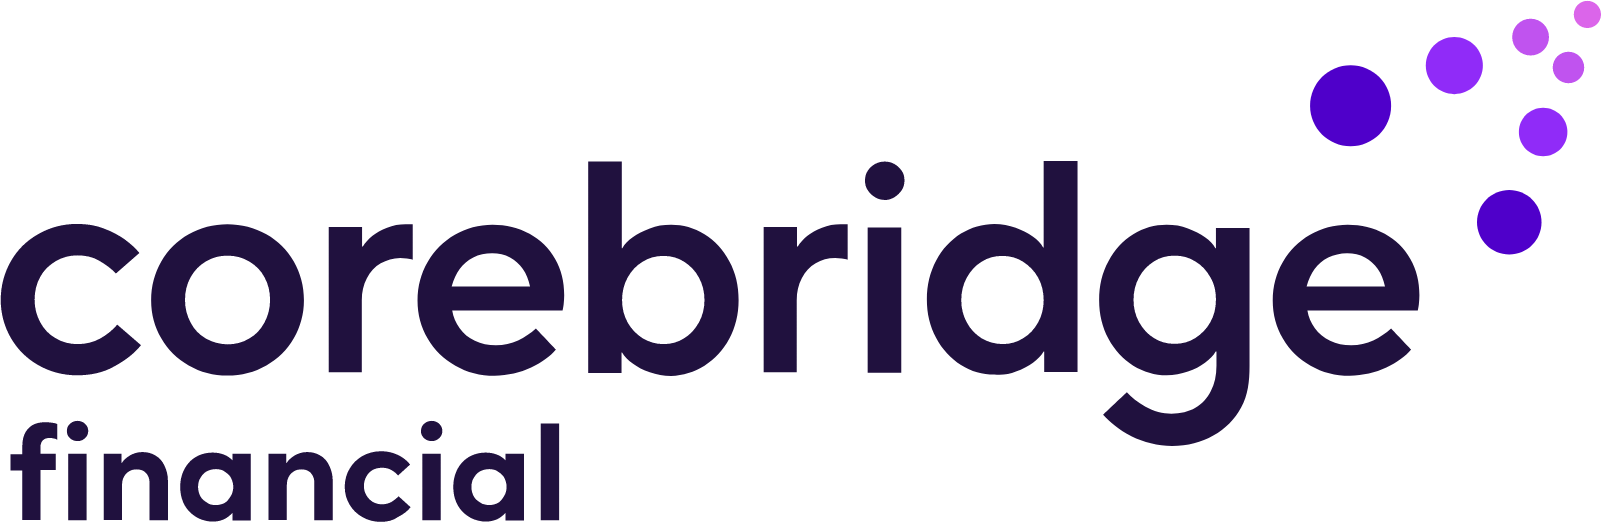 Corebridge Financial logo large (transparent PNG)